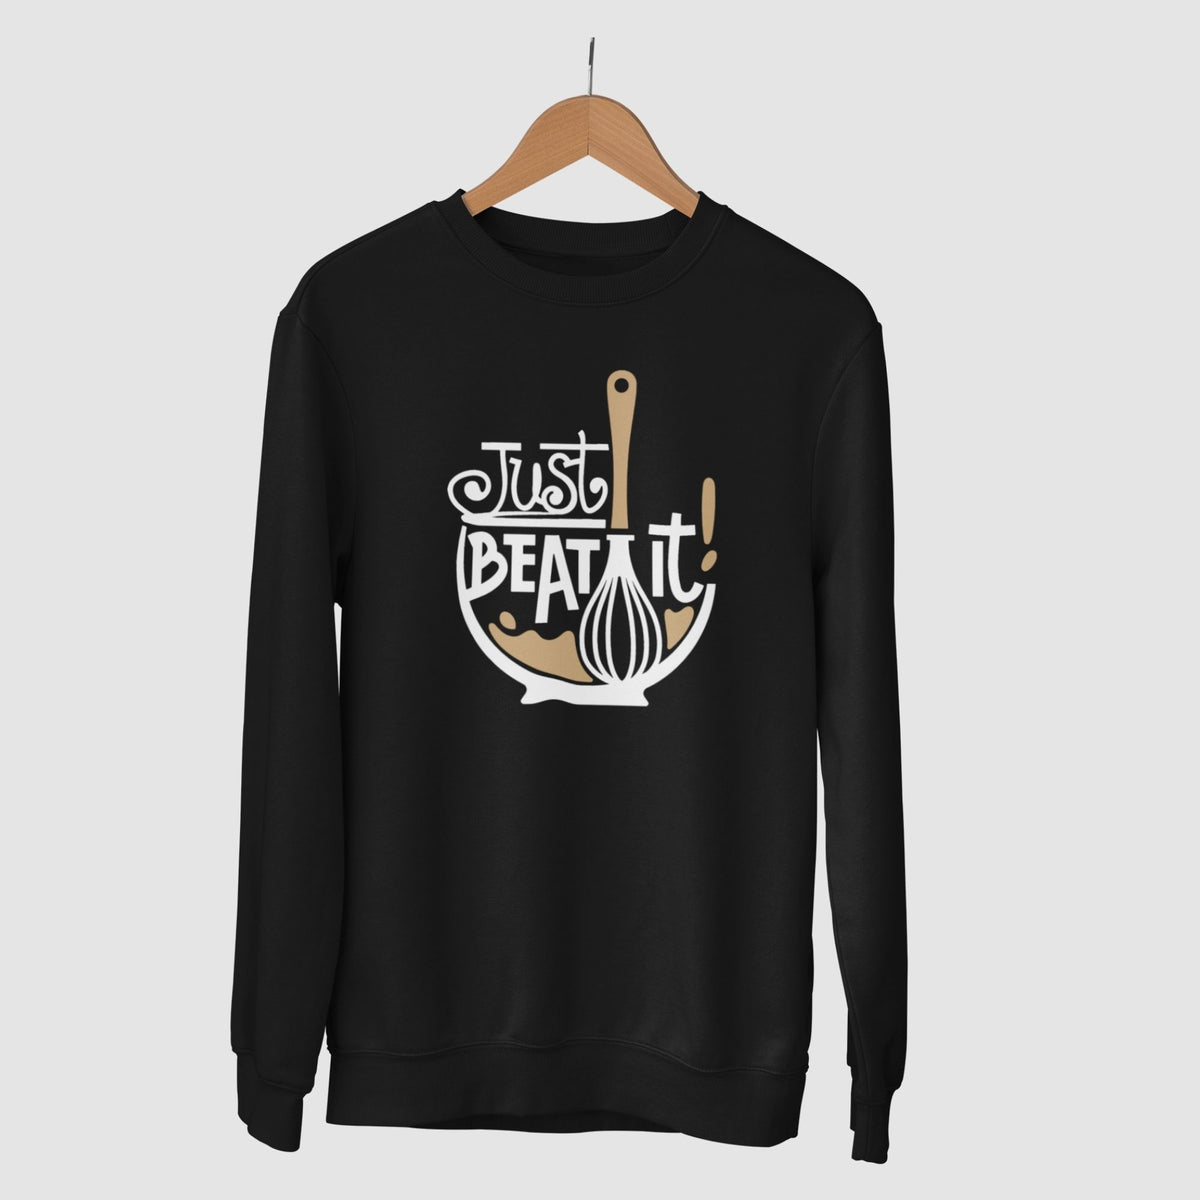 ust-beat-it-cotton-printed-unisex-black-sweatshirt-gogirgit-com